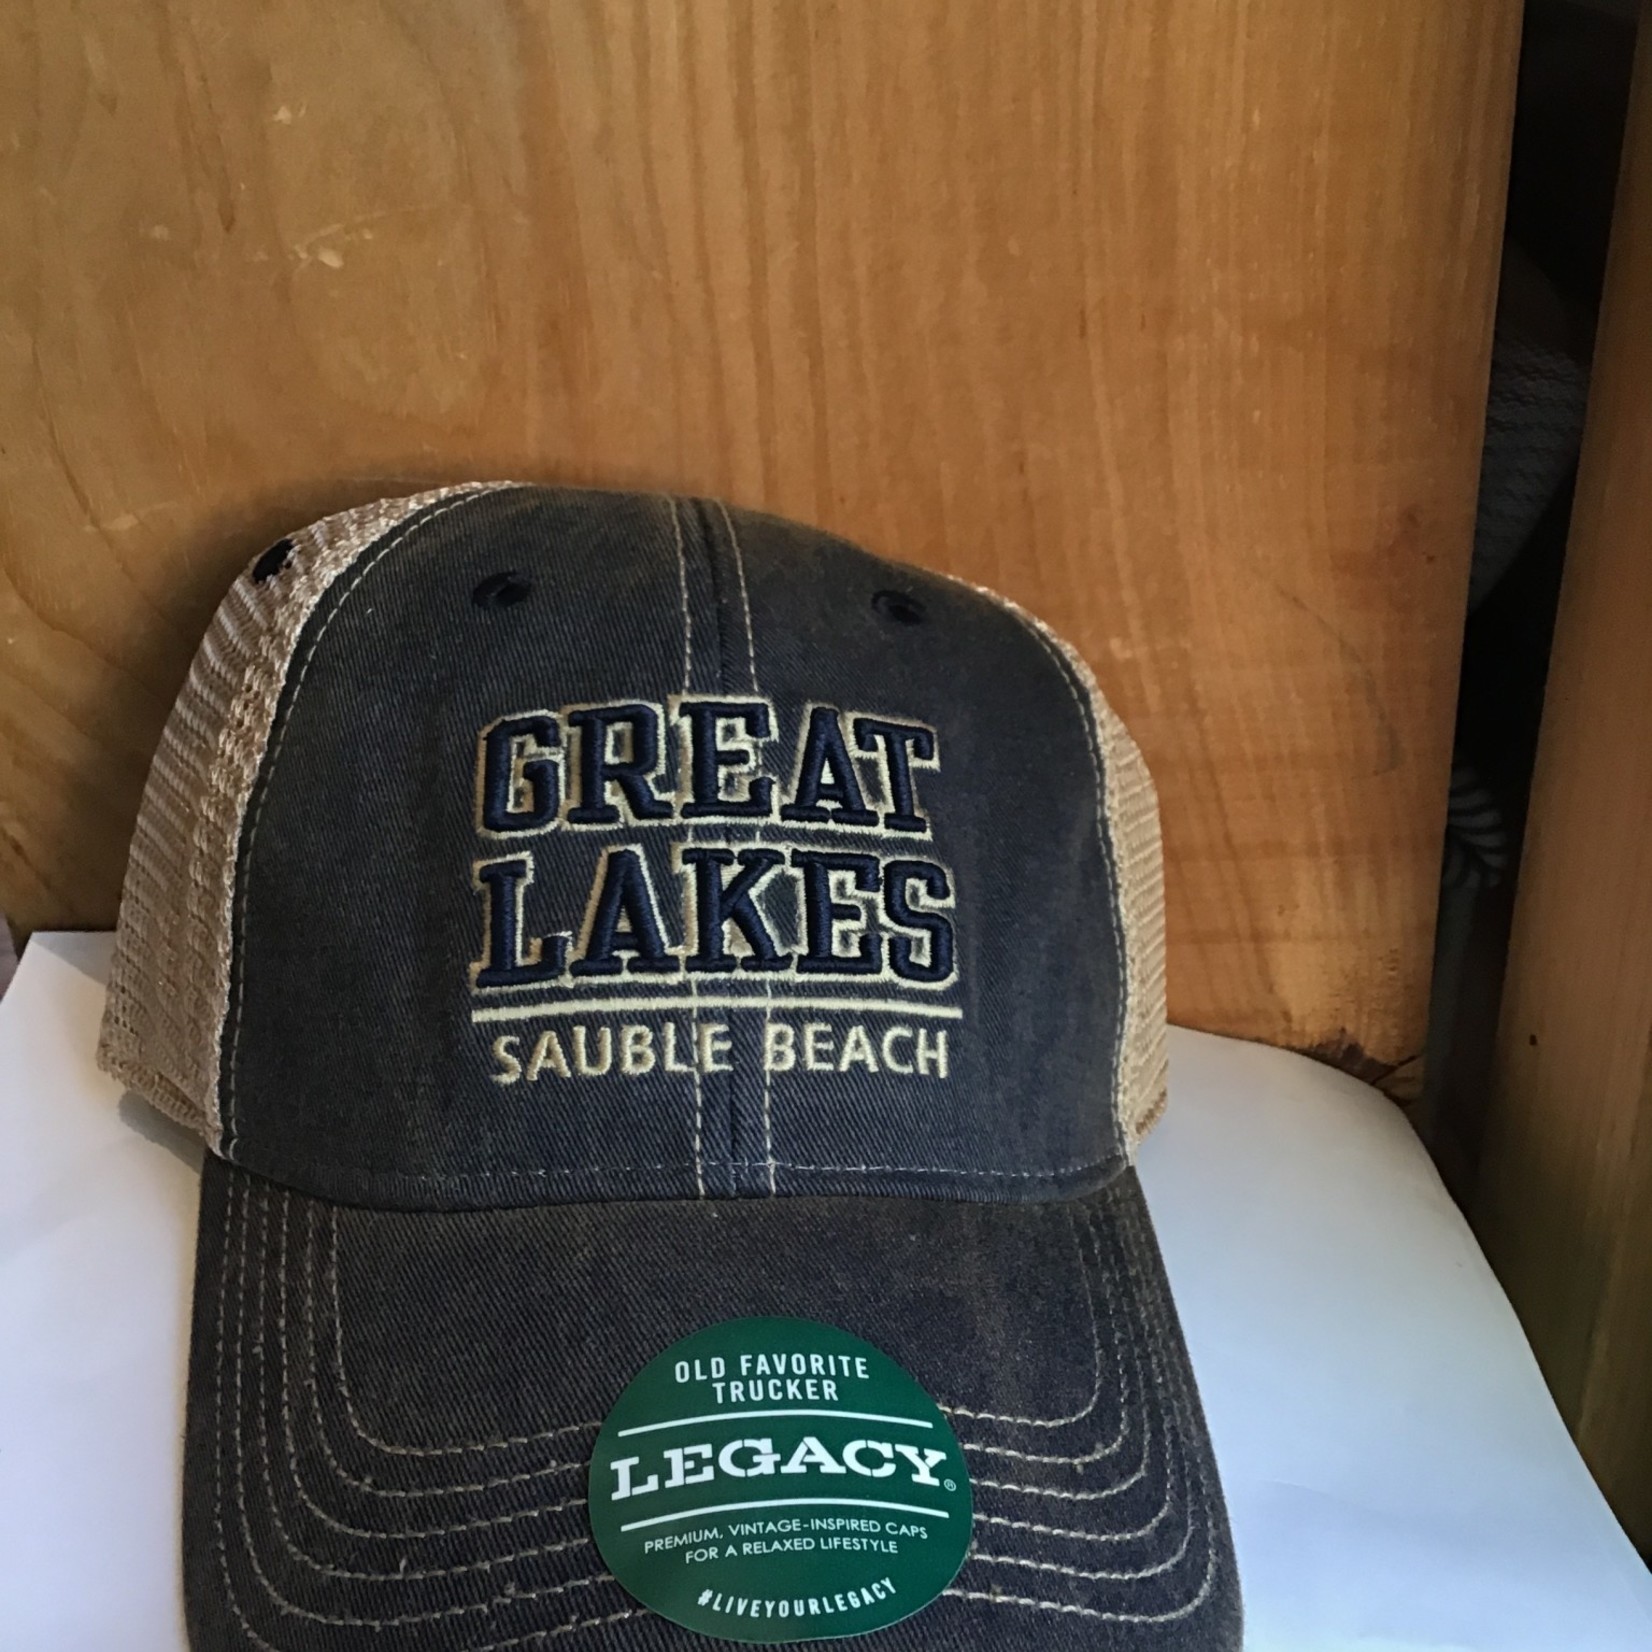 Sauble Beach Great Lakes block hat